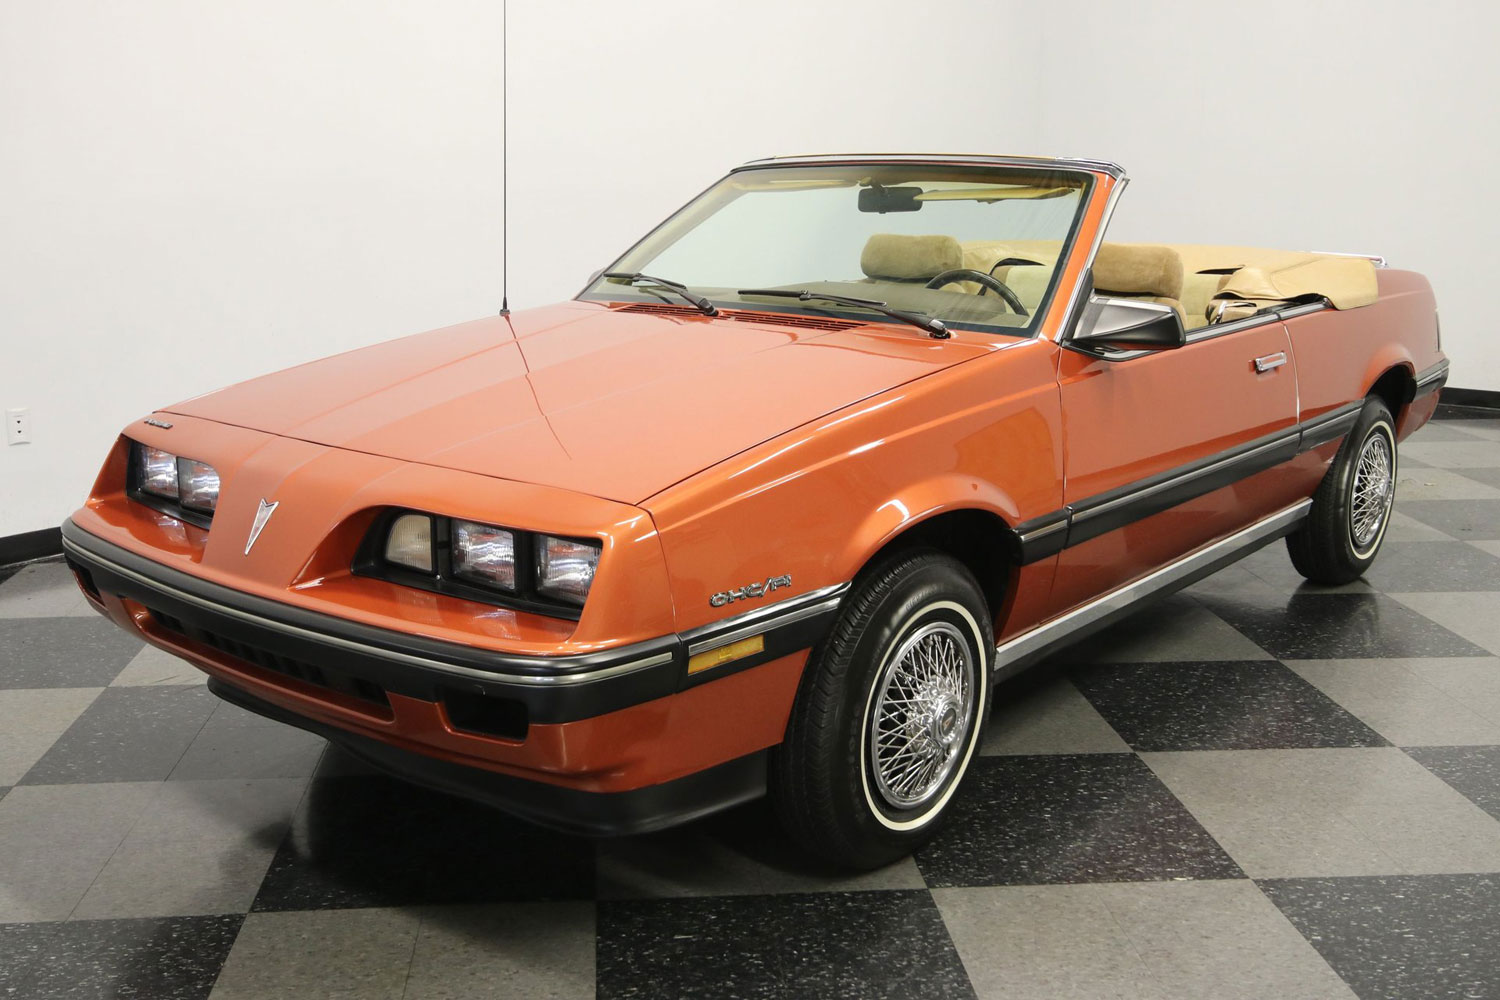 1985 Pontiac Sunbird Convertible For Sale: Video